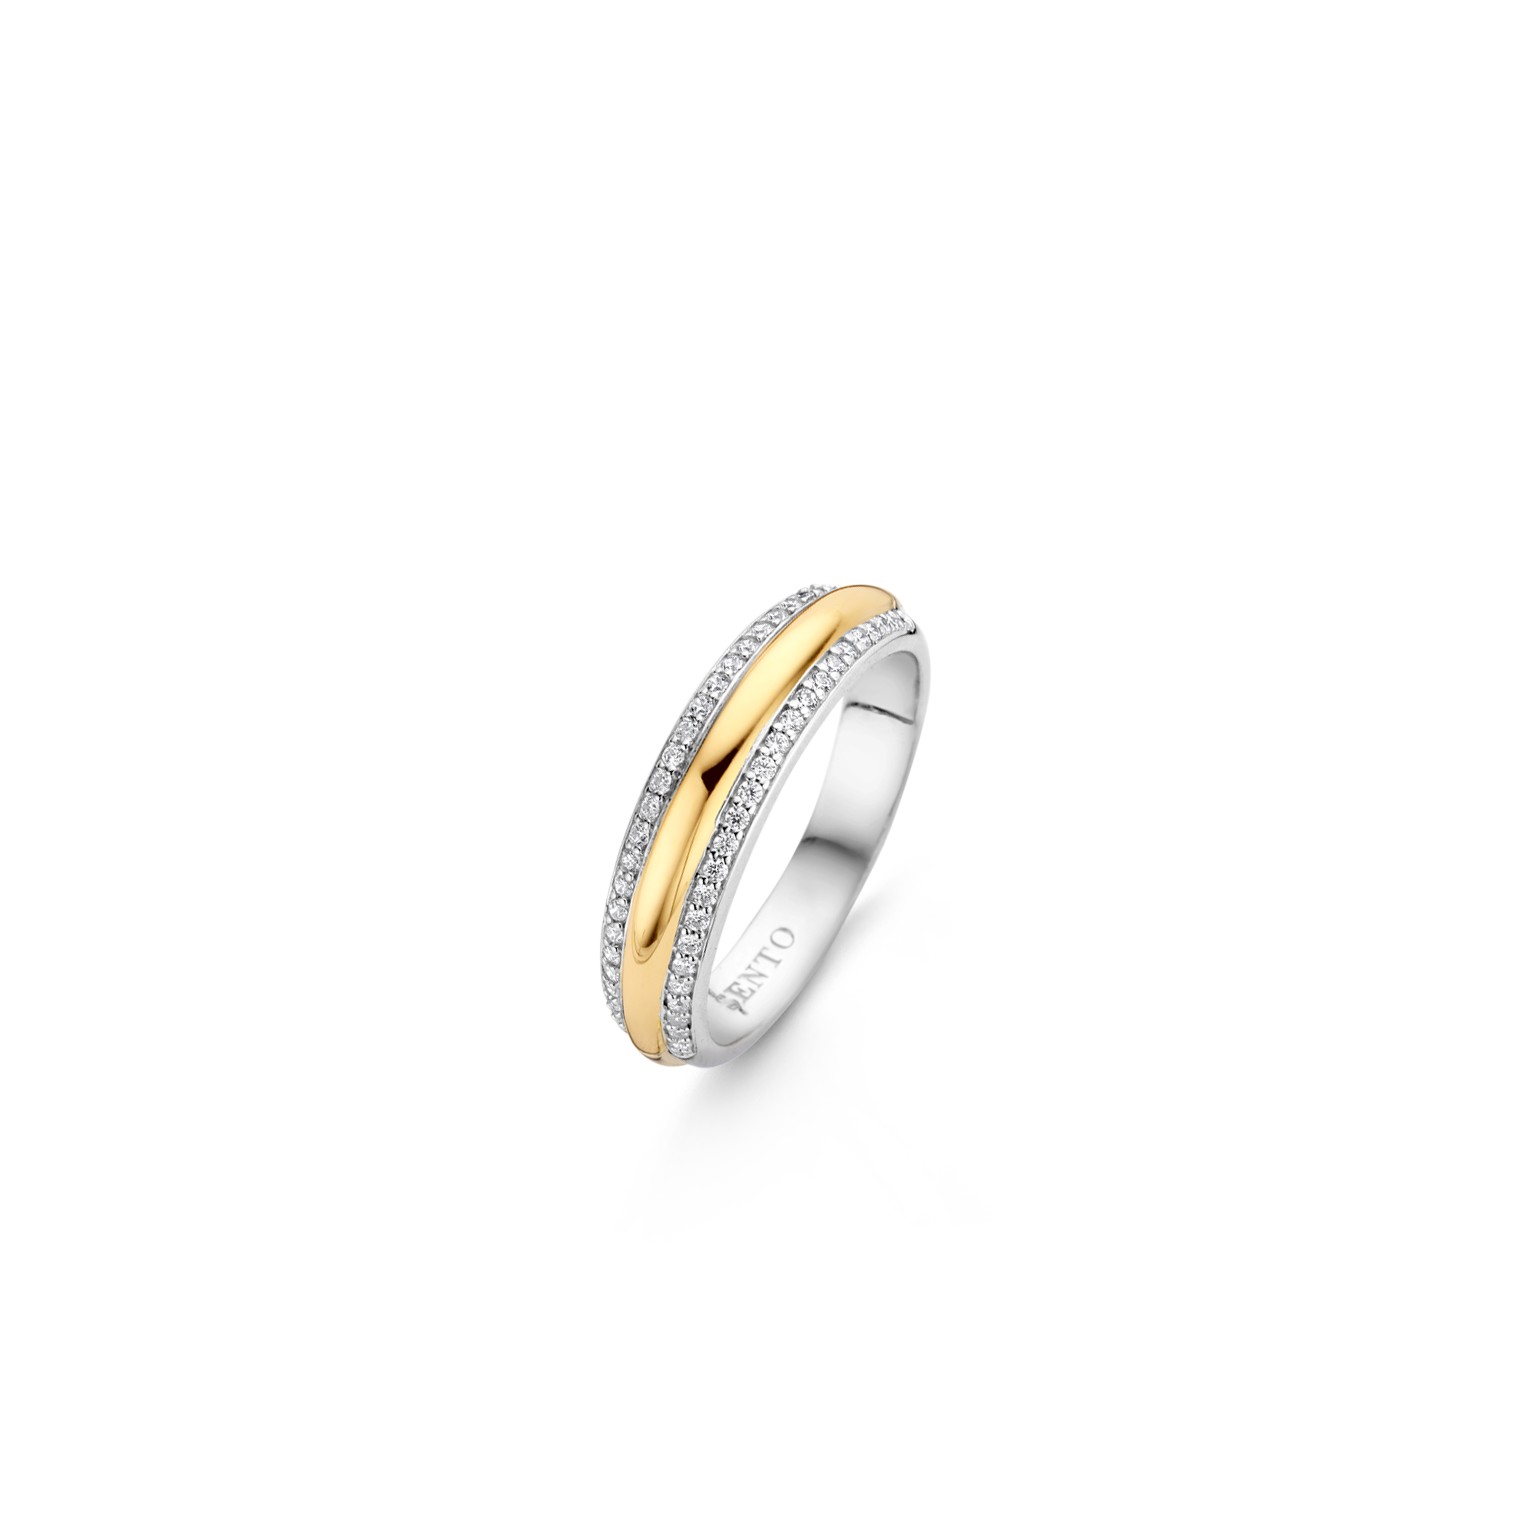 TI SENTO - Milano Ring 12144ZY Gala Jewelers Inc. White Oak, PA